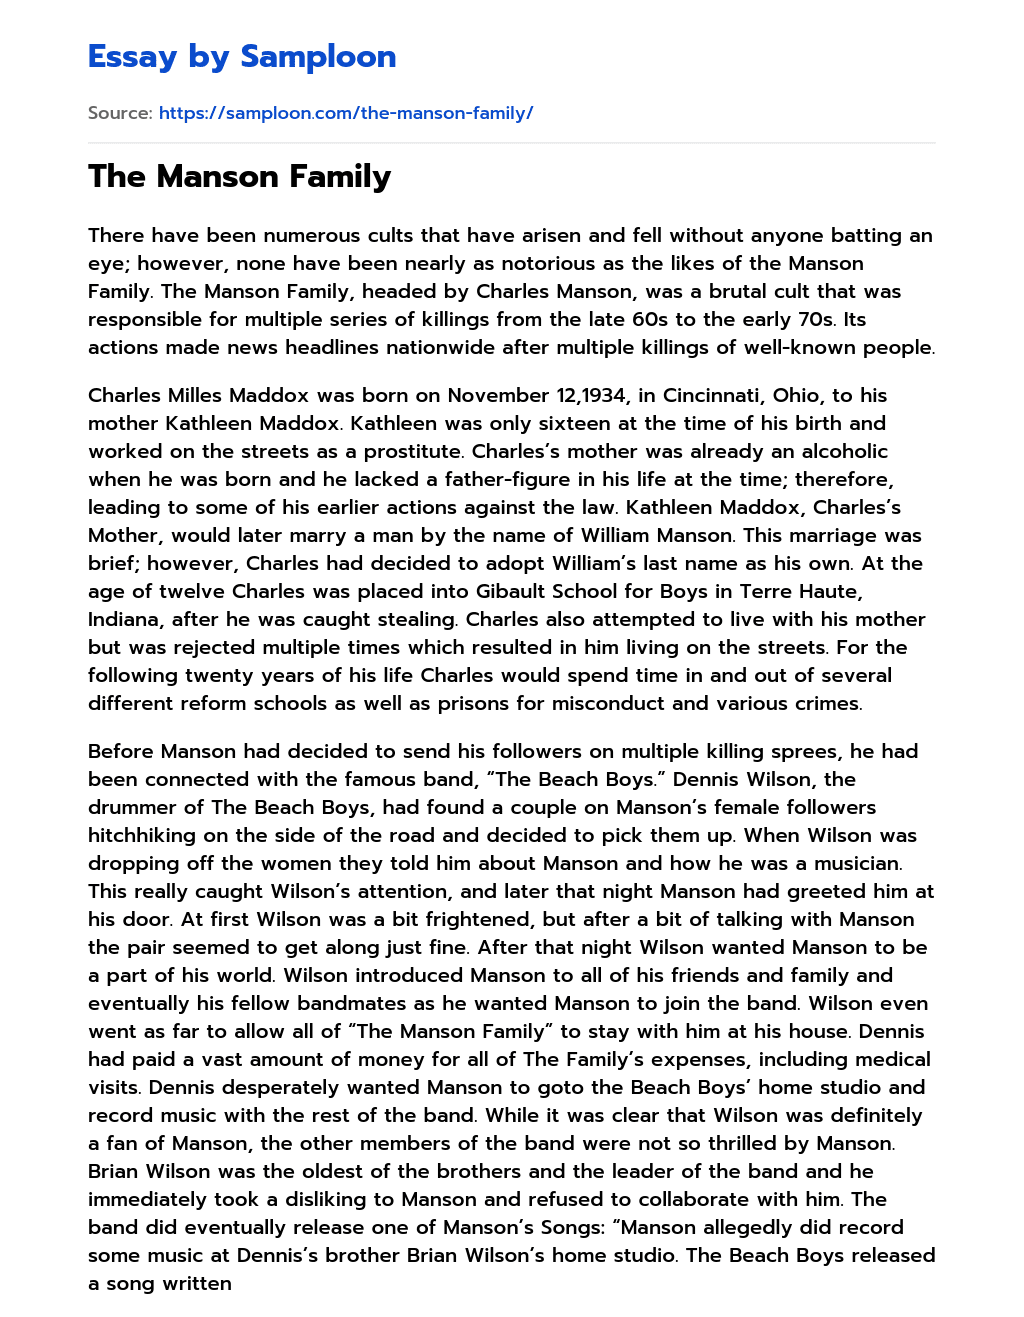 The Manson Family essay